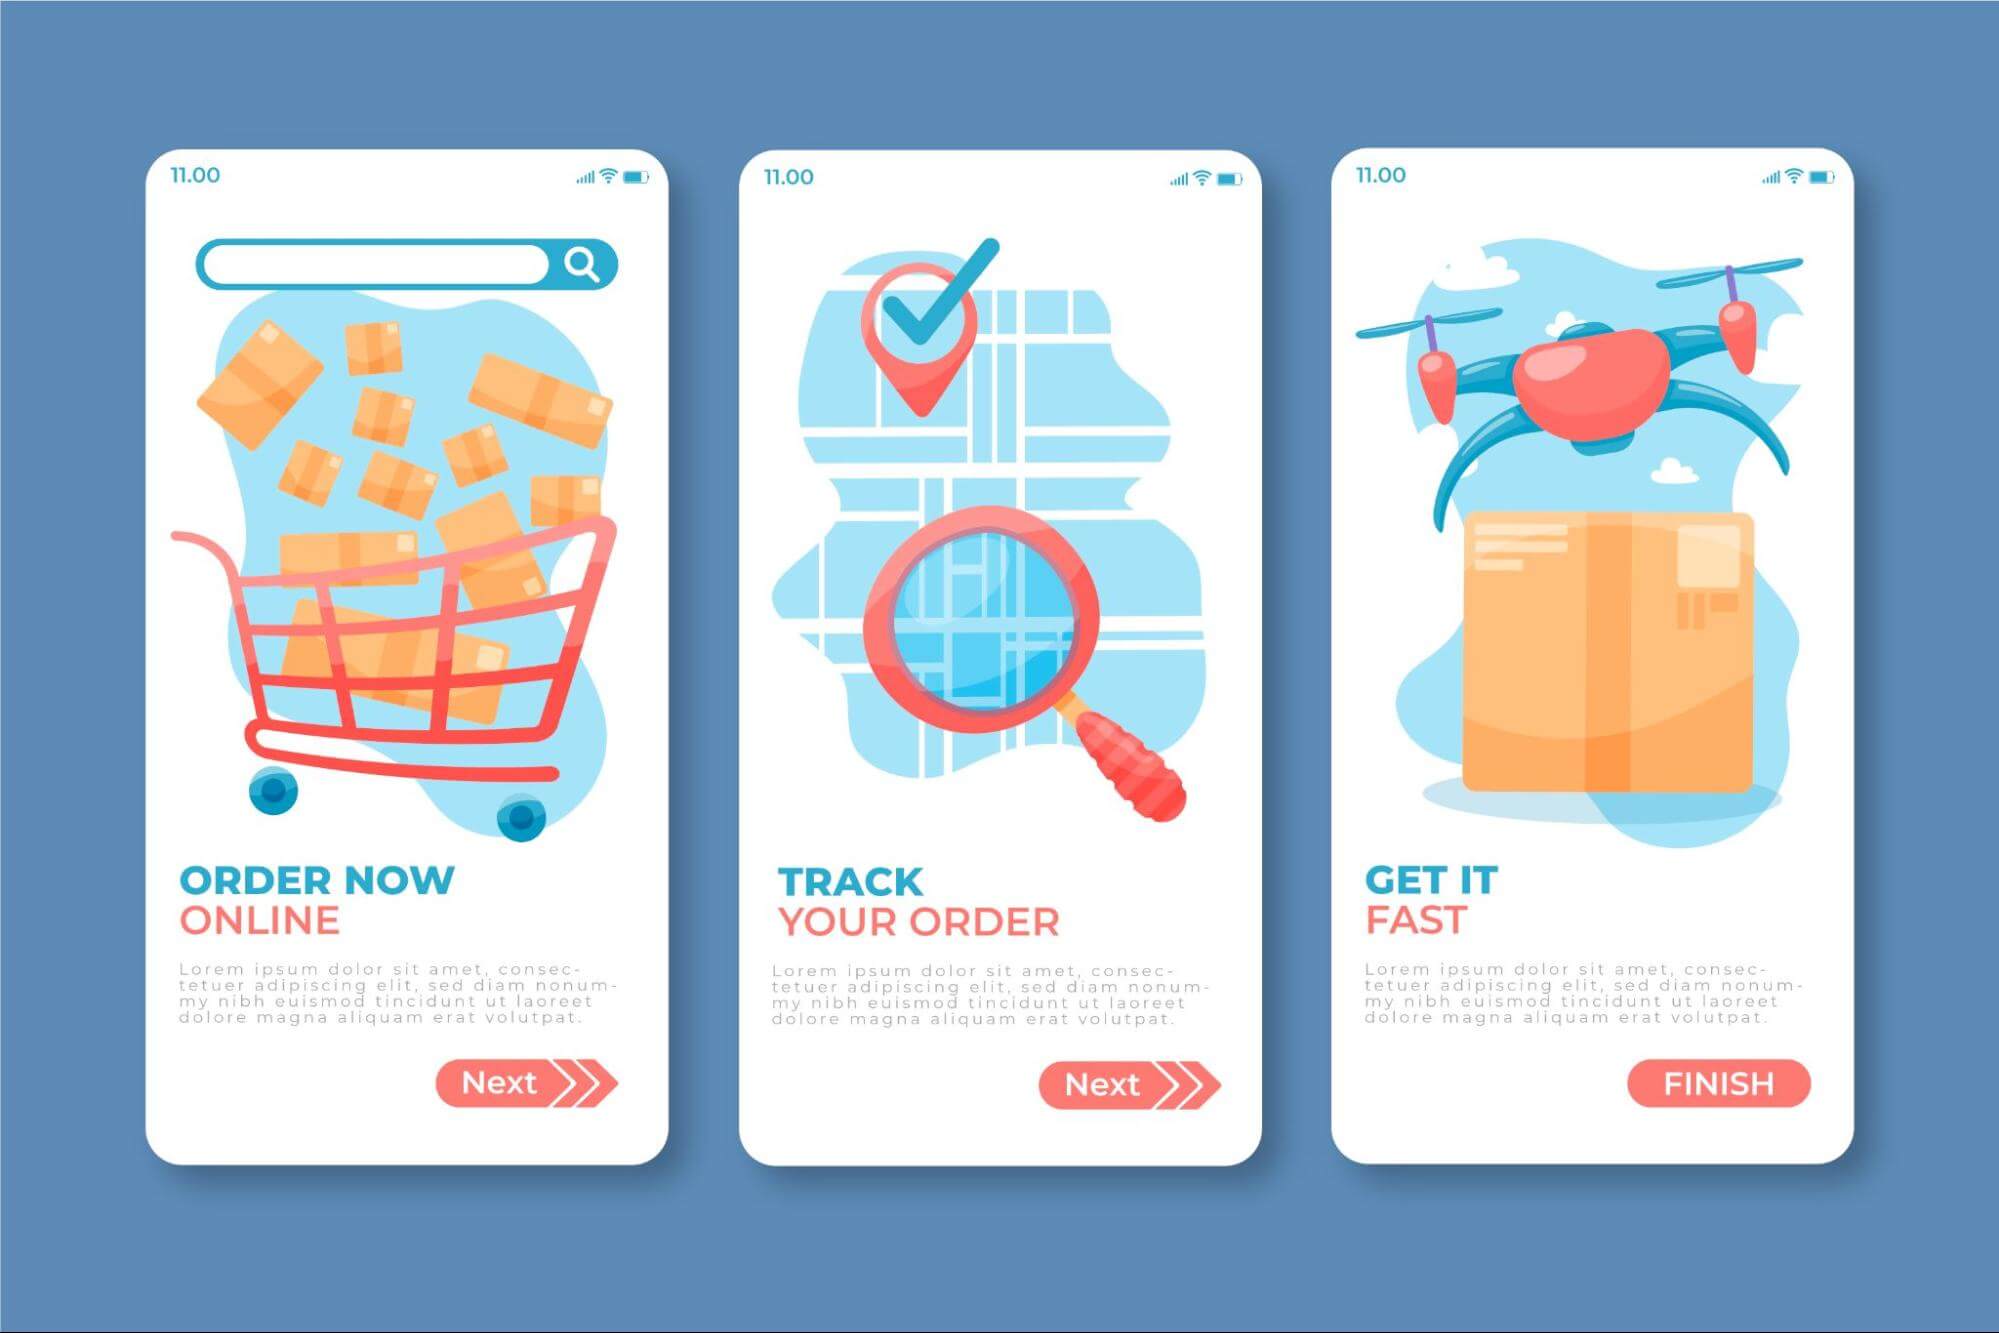 design mobile friendly version to Shopify store design